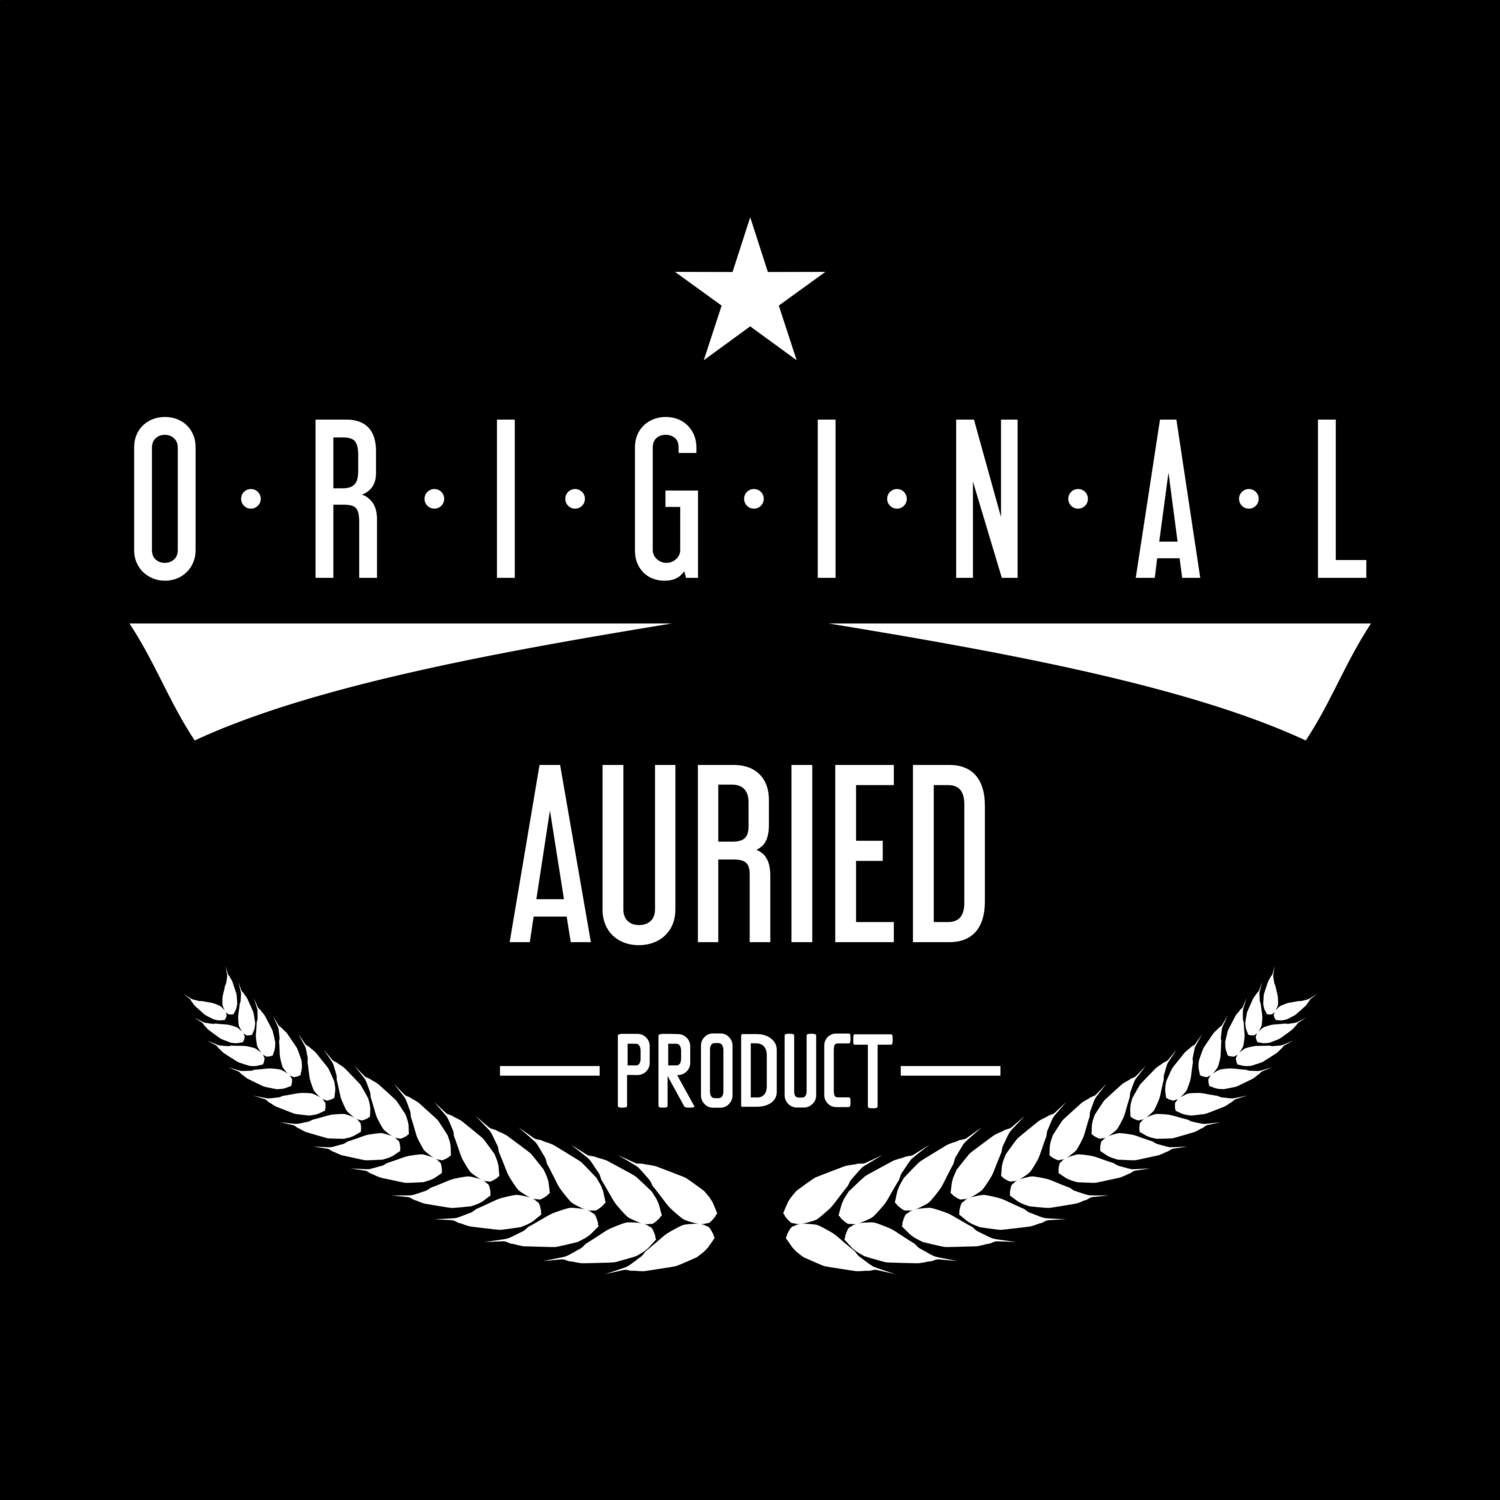 Auried T-Shirt »Original Product«